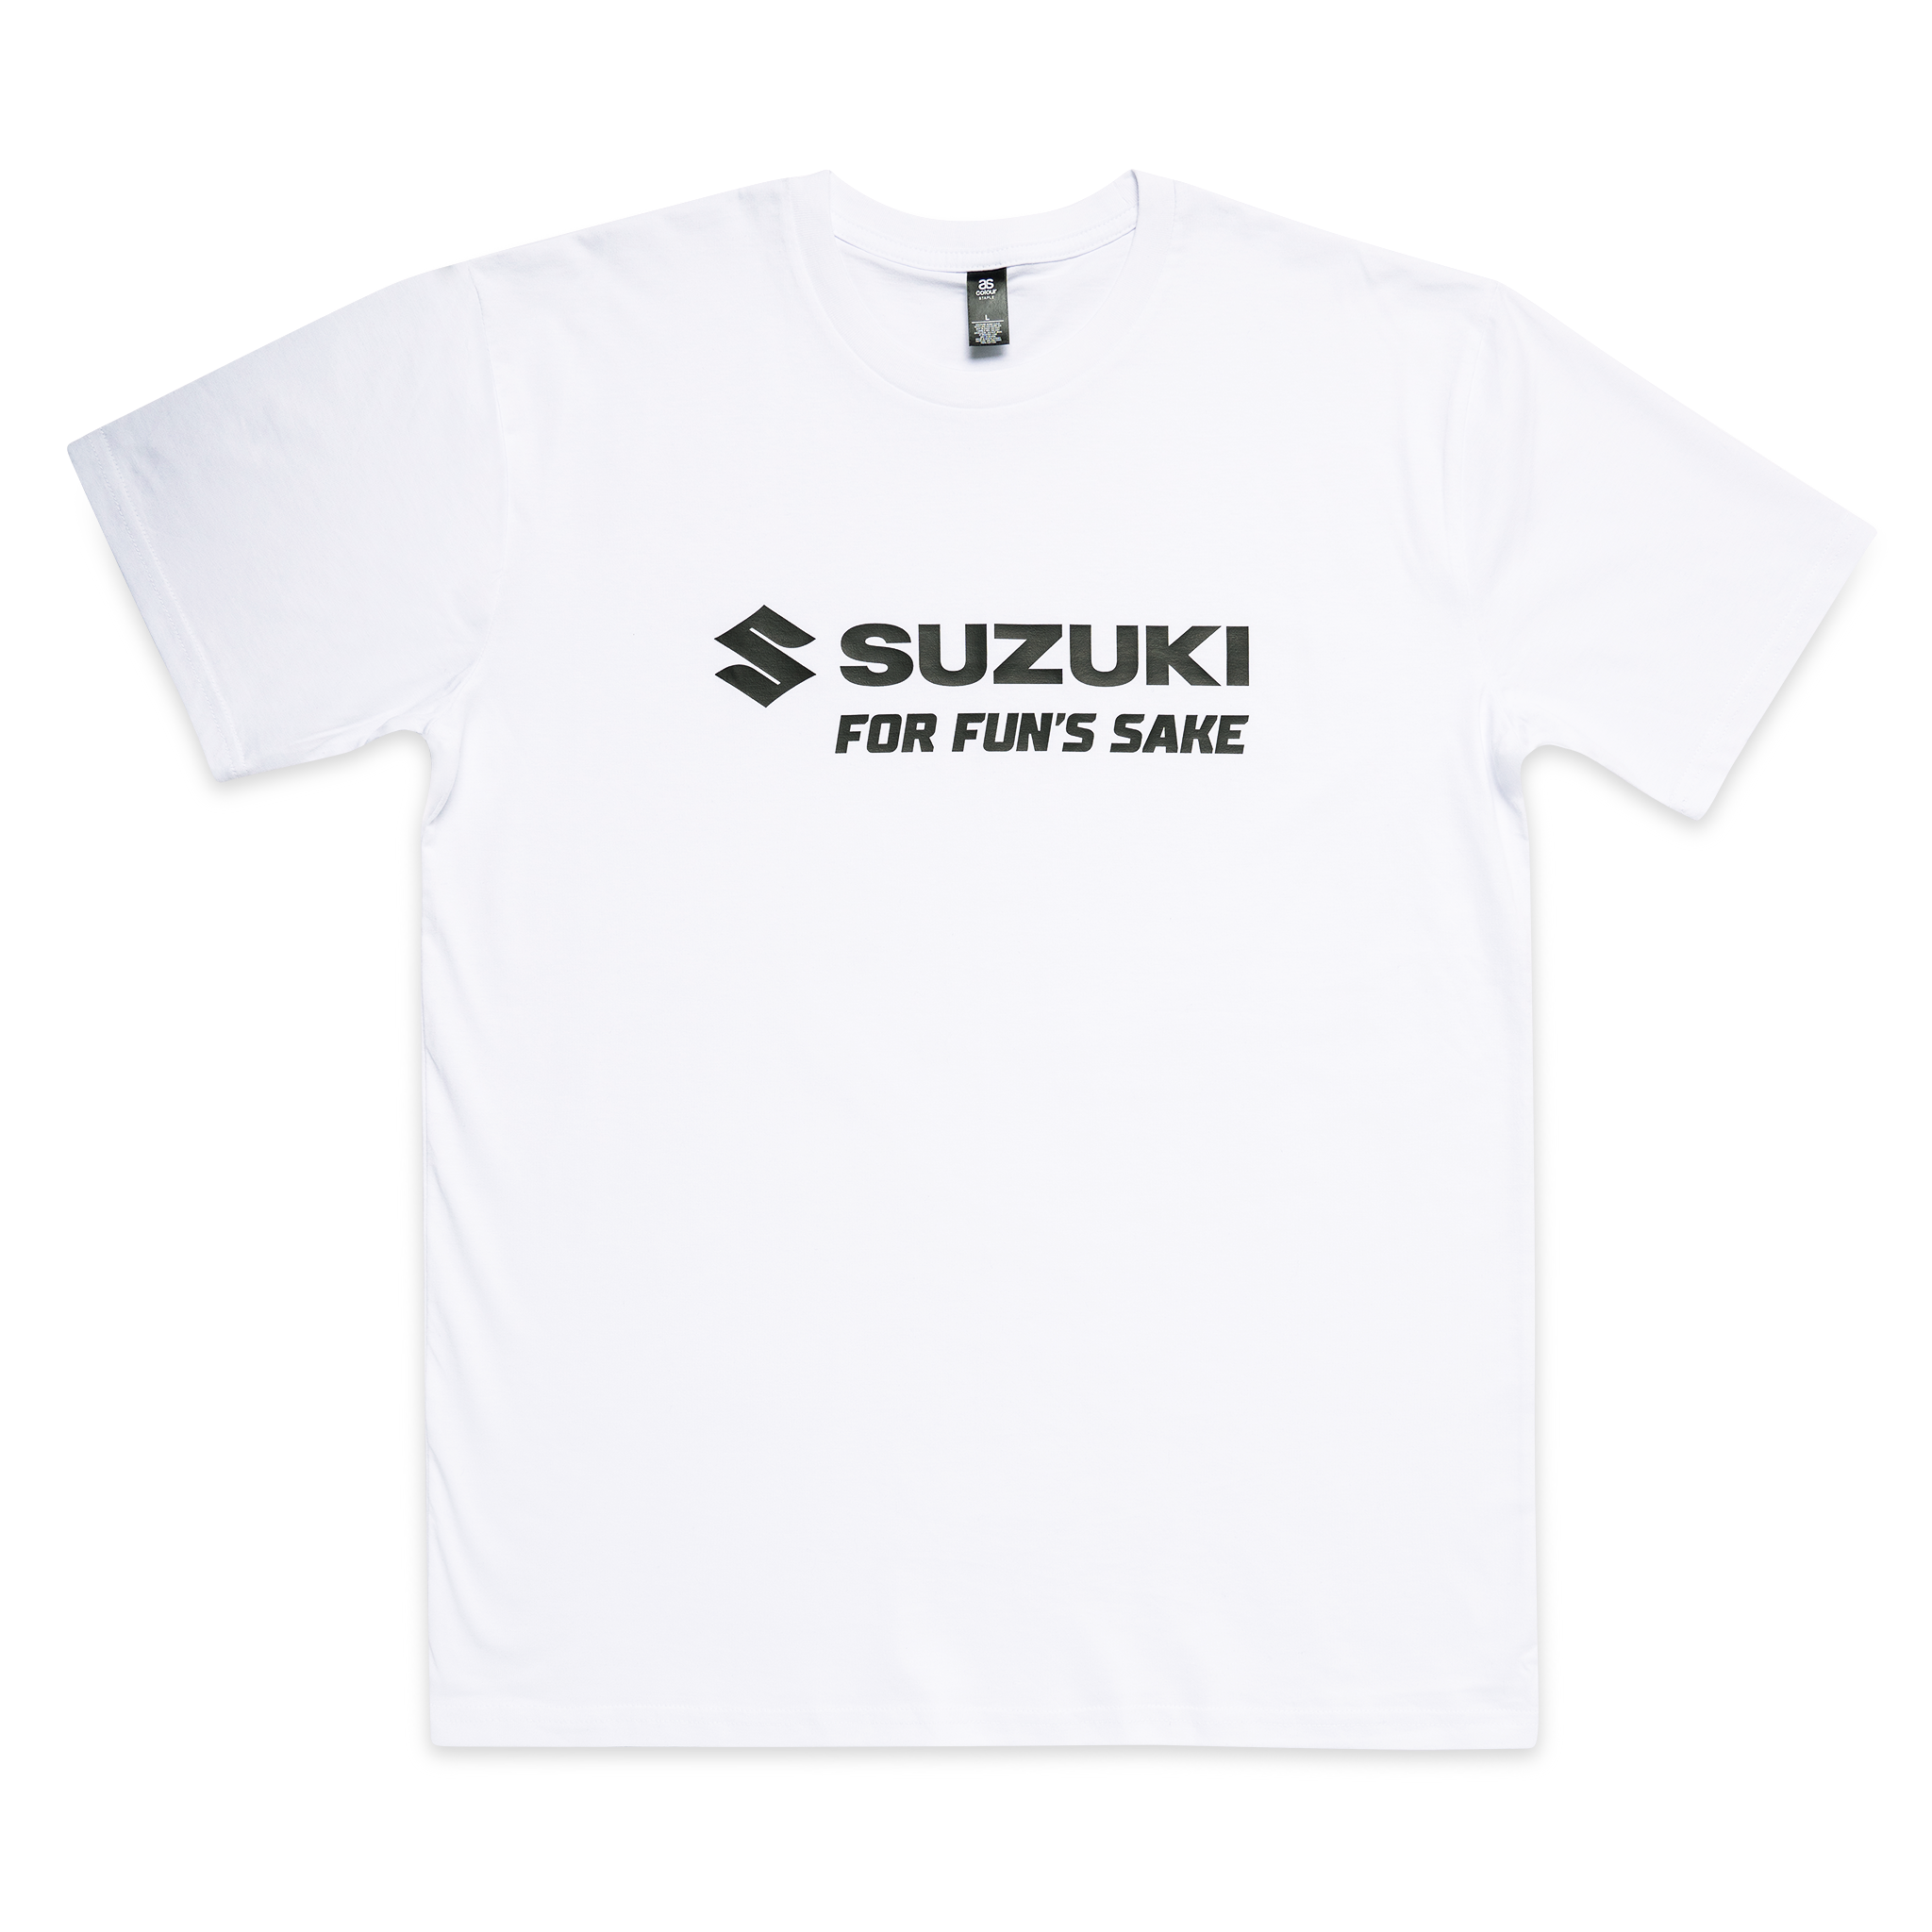 Suzuki For Fun's Sake Tee